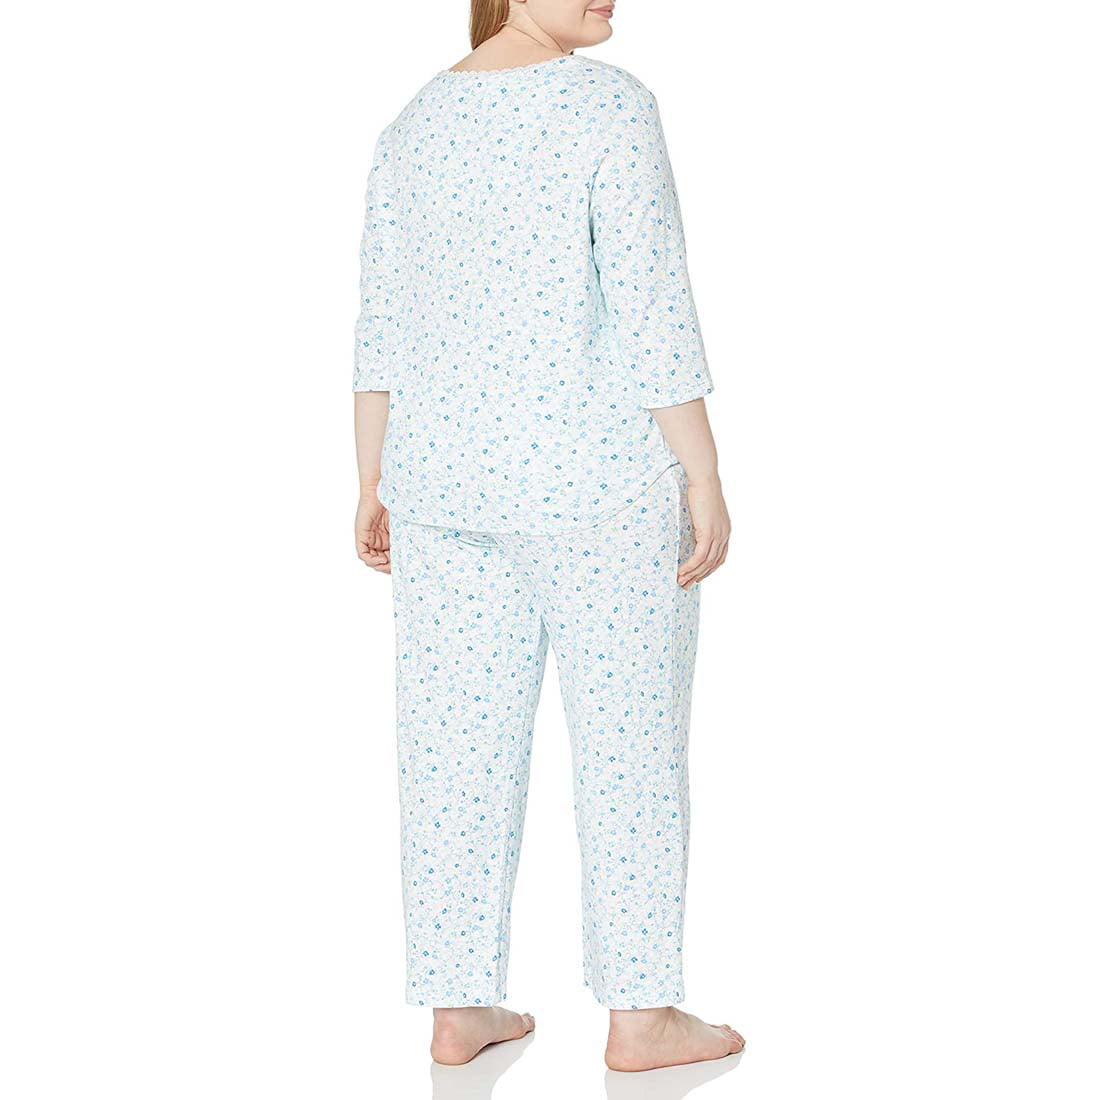 Karen Neuburger Womens Pajamas 3/4 Sleeve Pullover Henley Pj Set Pajama Set